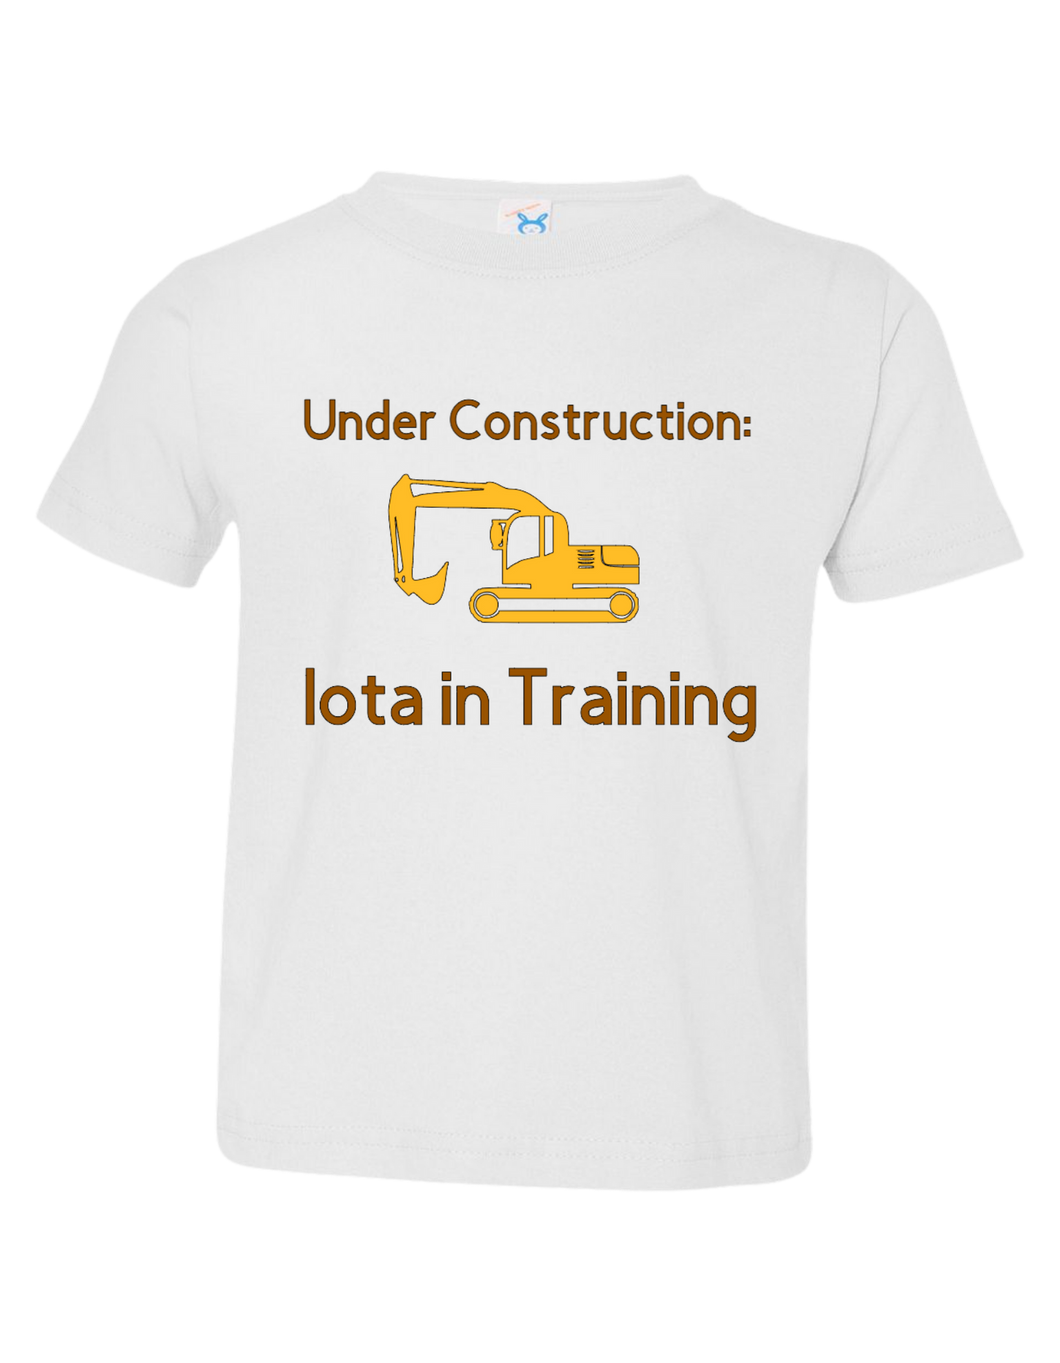 Under Construction 9T (Iota)